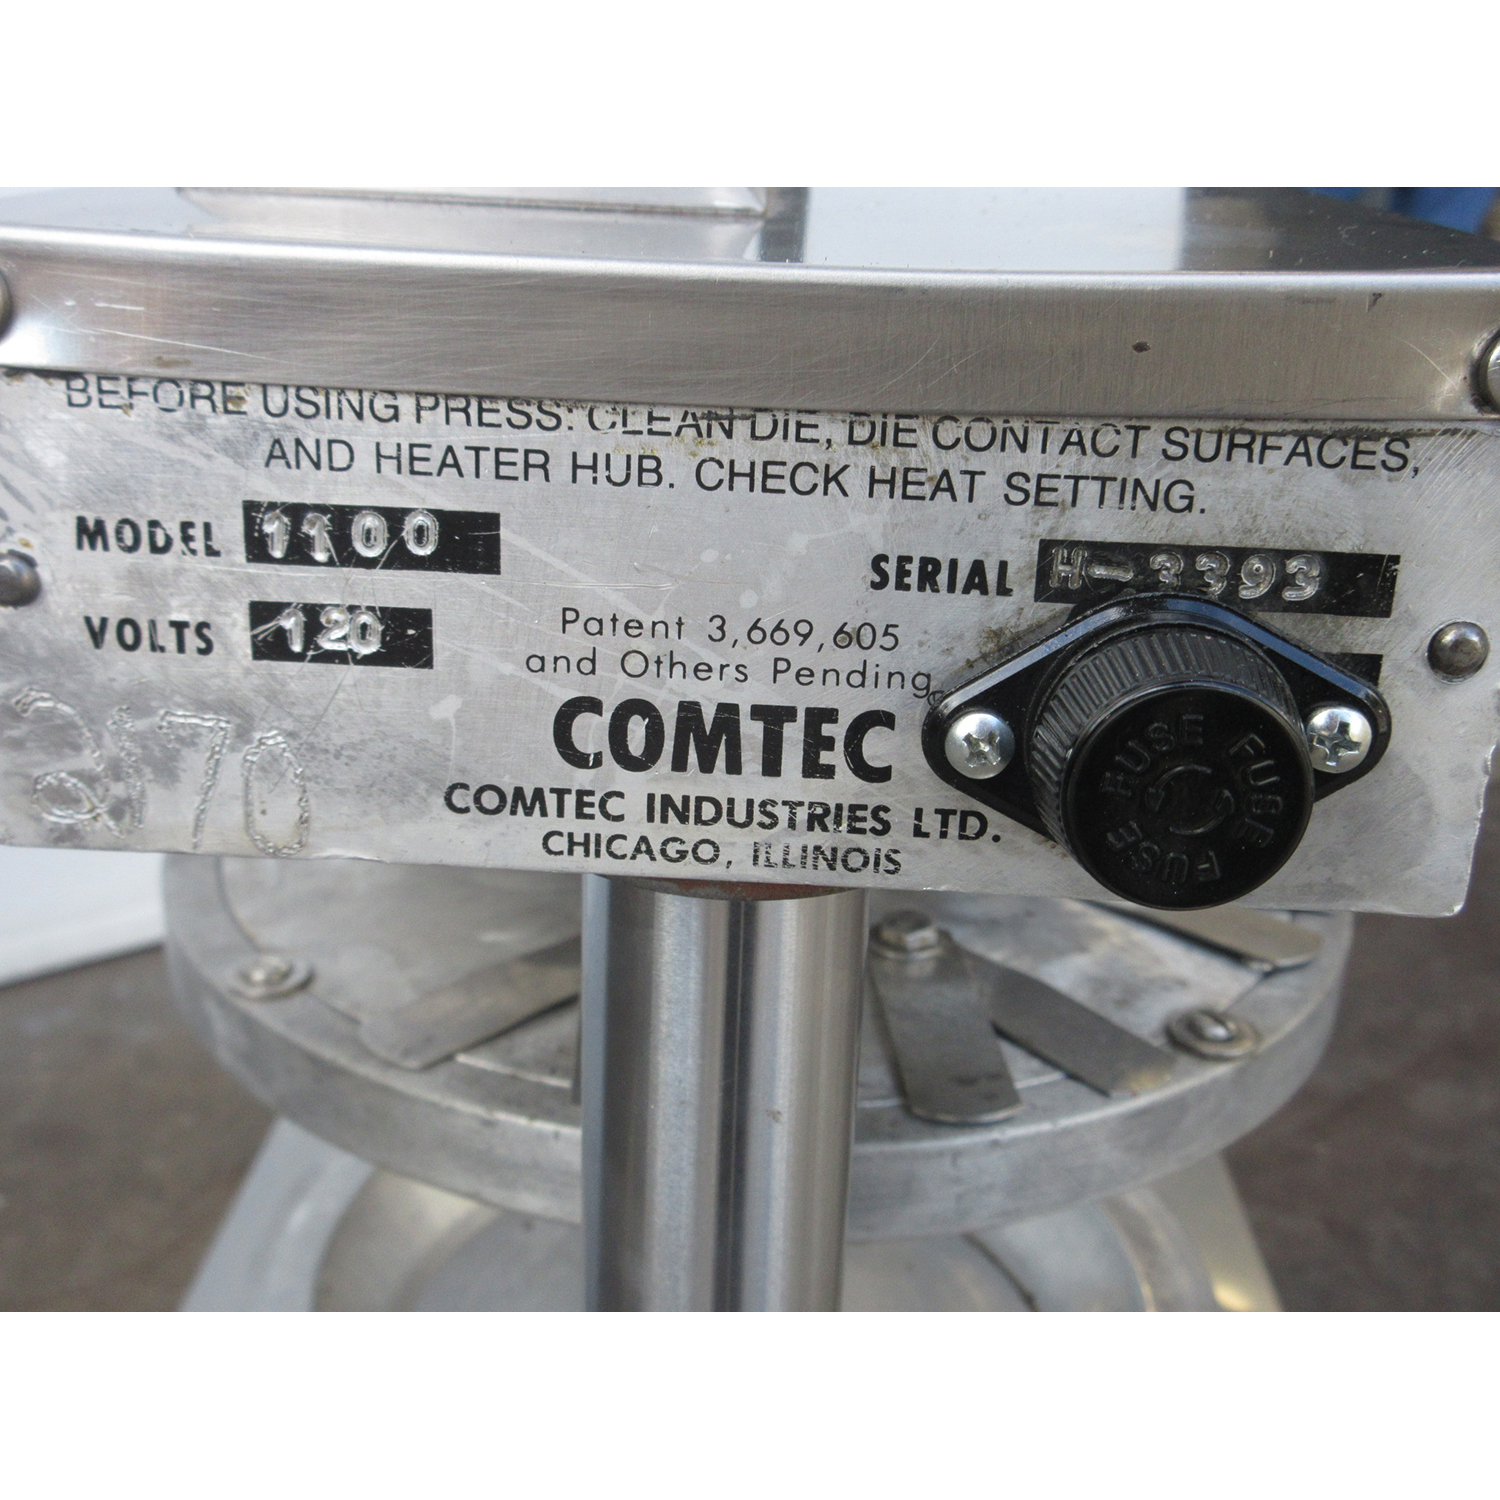 Comtec 1100 Pie Press, Used Excellent Condition image 1